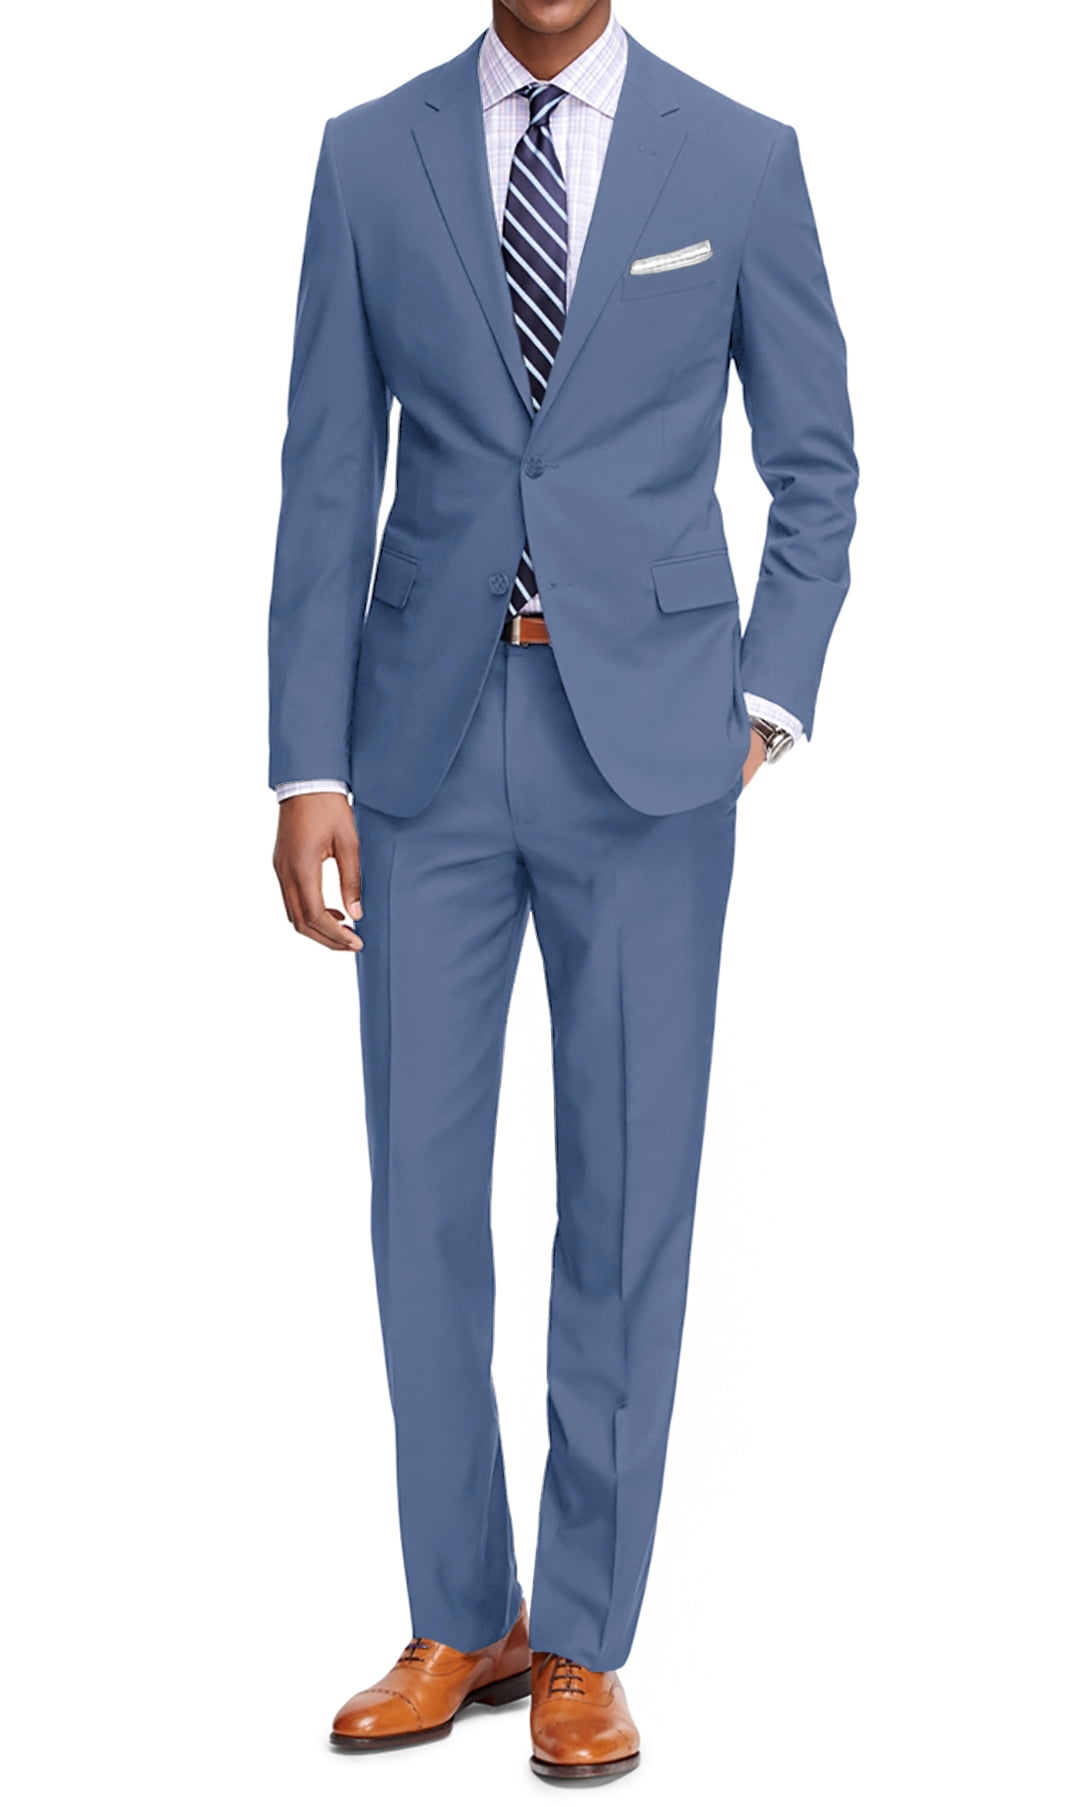 Black Business Men Suits Custom Made,Bespoke Classic Black Wedding Suit for  Men | eBay